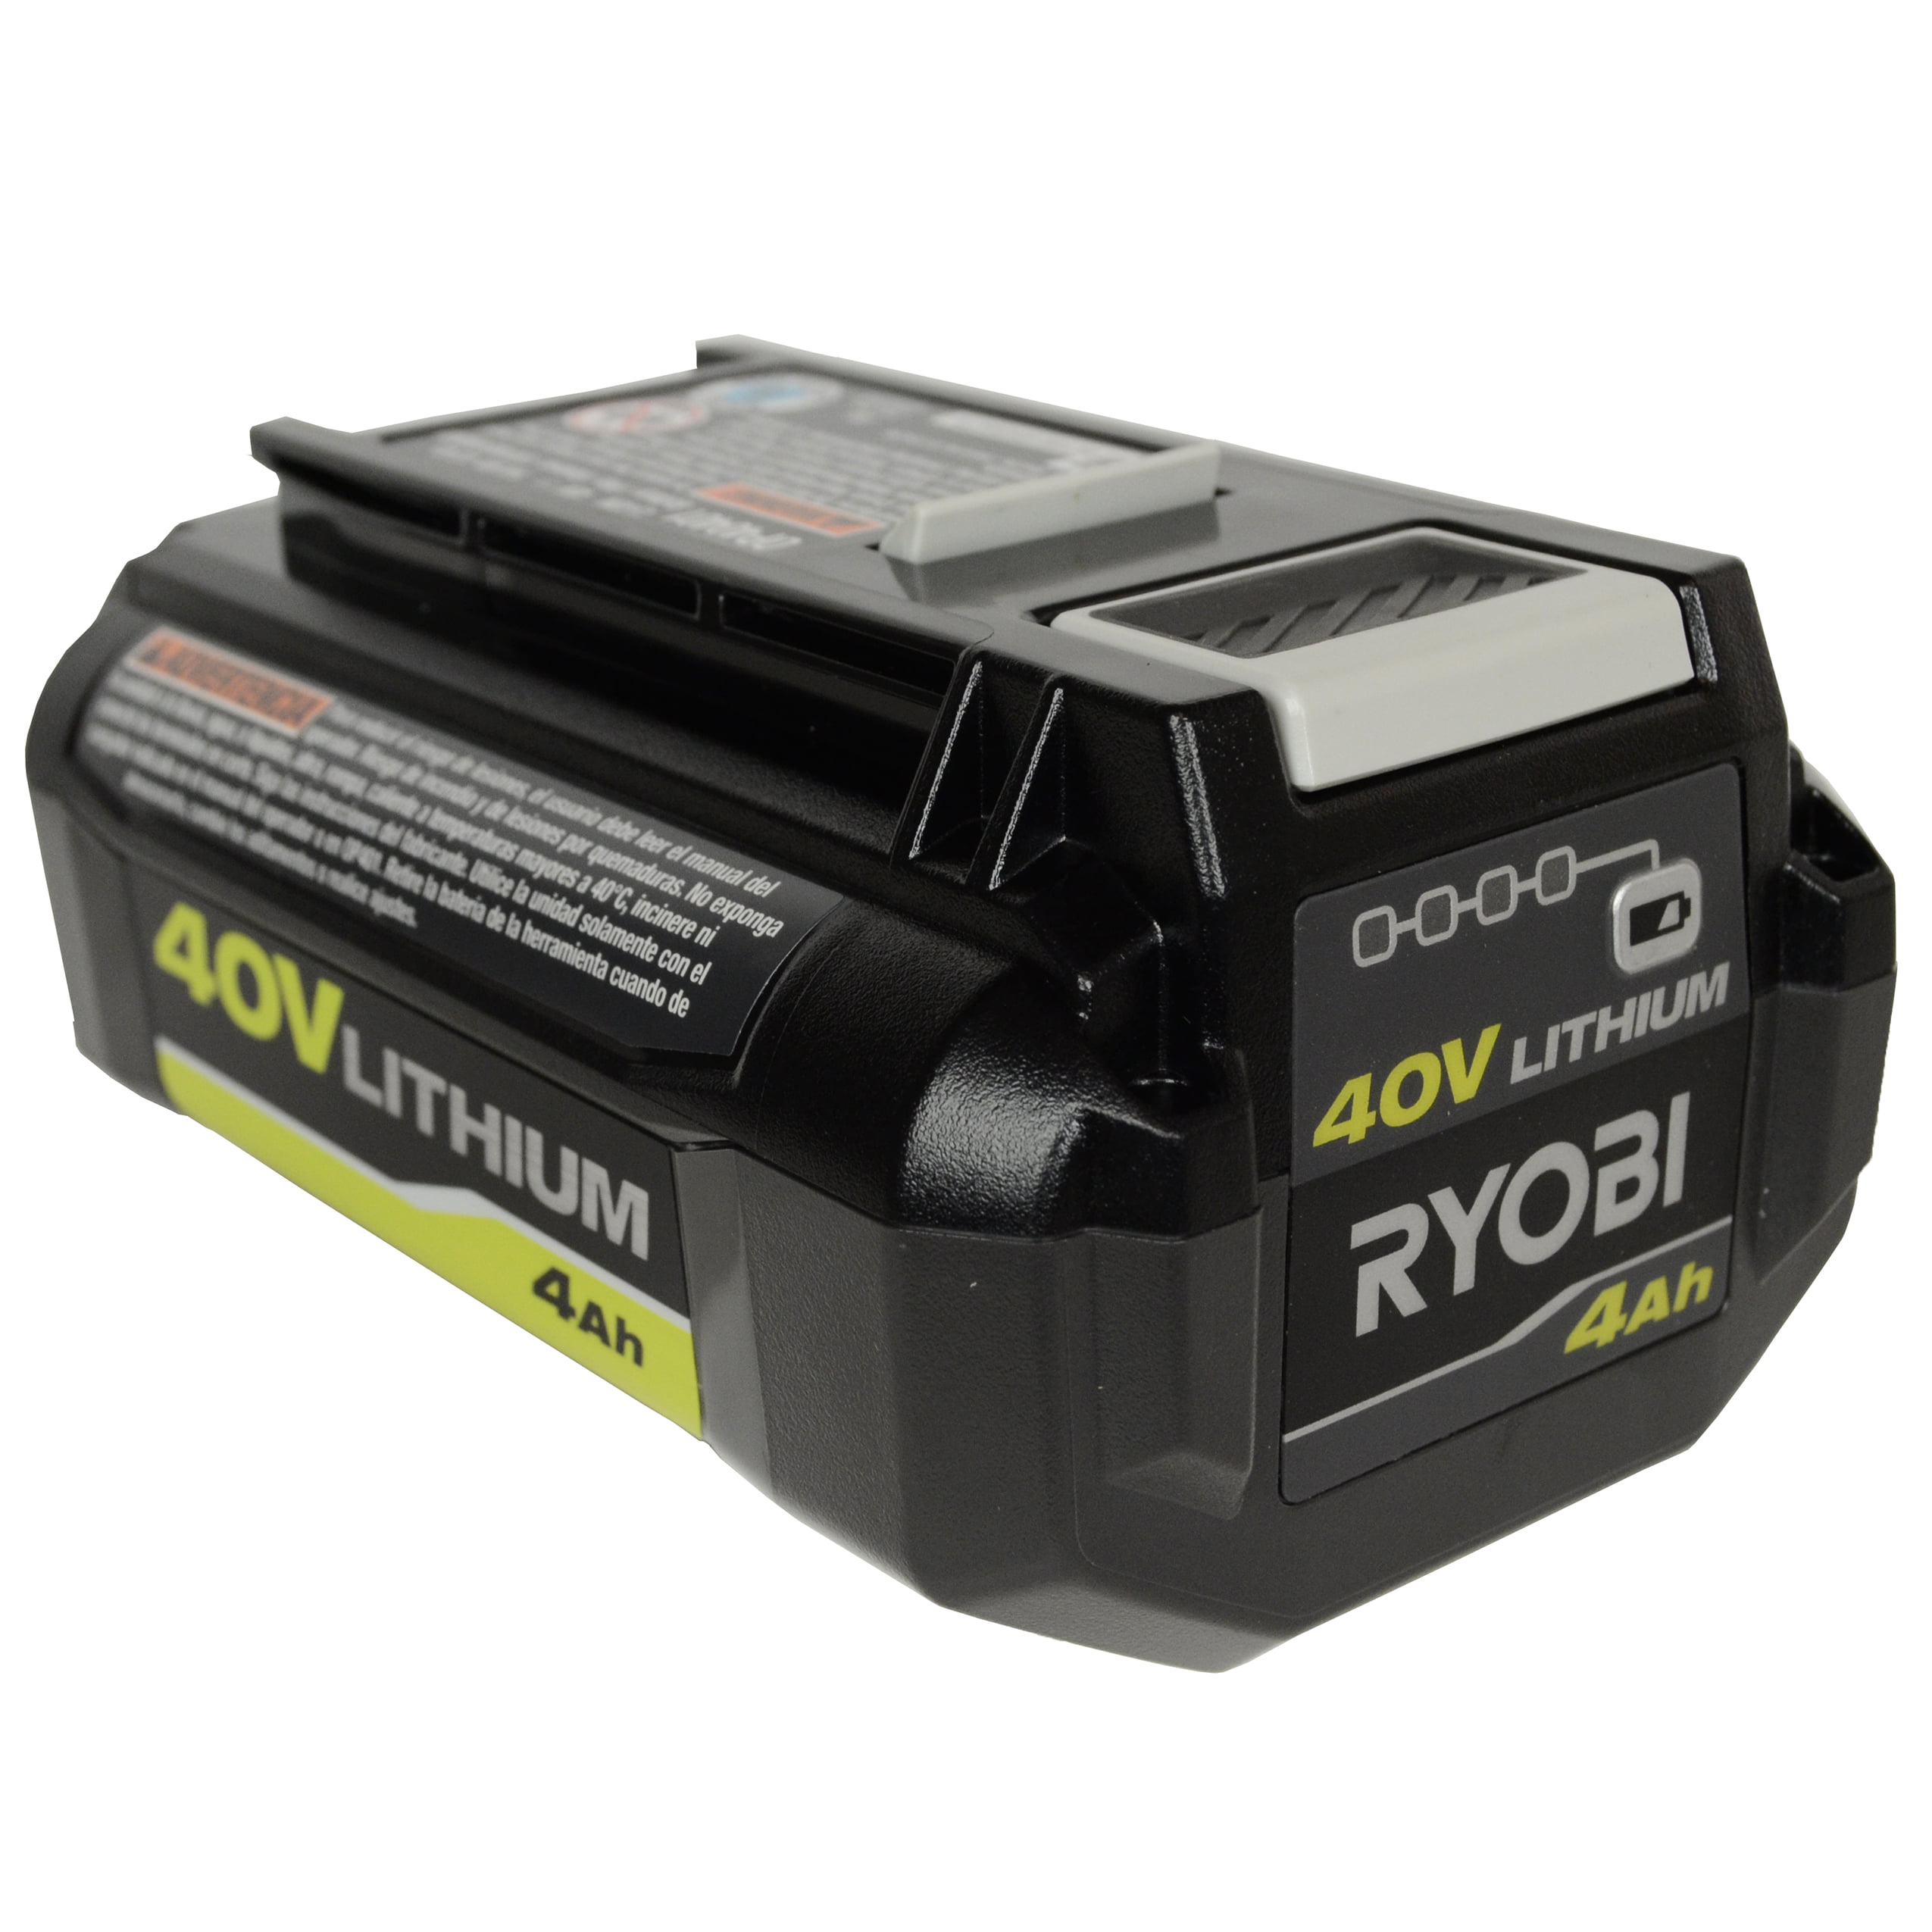 Ryobi Op40401 40v 4 0ah Lithium Ion Battery Pack Walmart Com Walmart Com